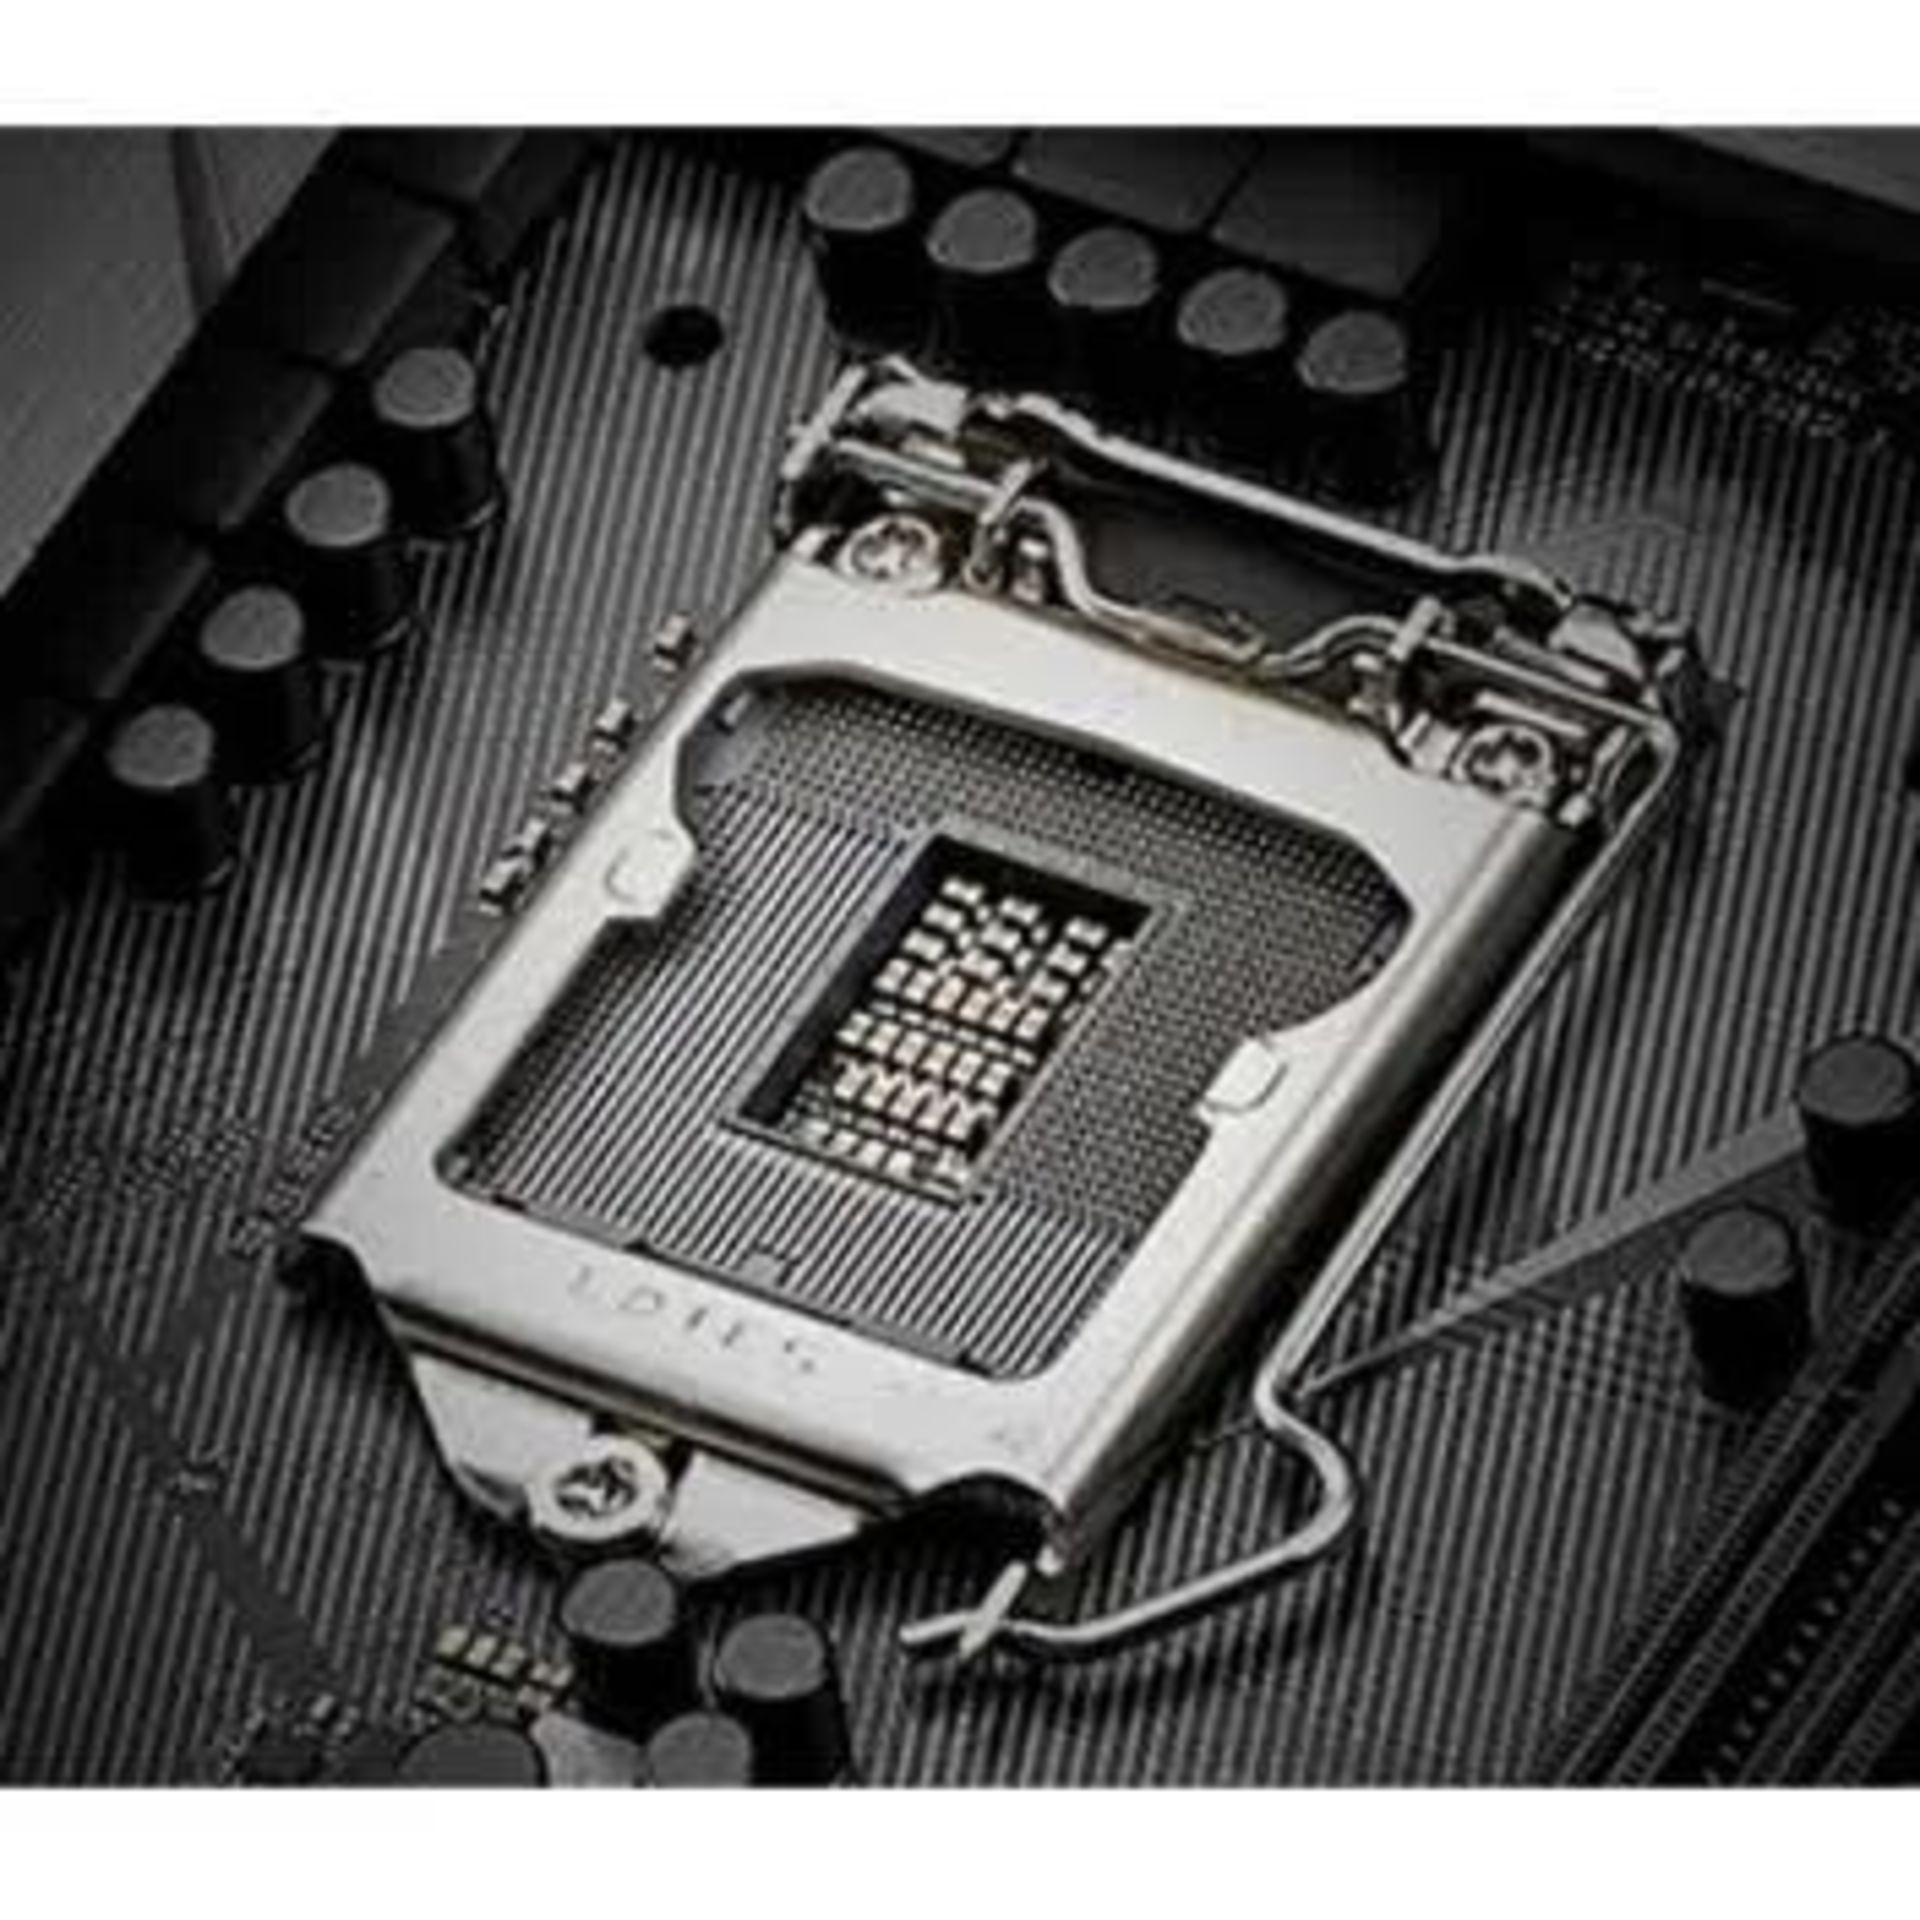 ROG STRIX Z370-F GAMING Intel Z370 ATX gaming motherboard. - P1. RRP £499.99. Intel Z370 ATX - Image 3 of 3